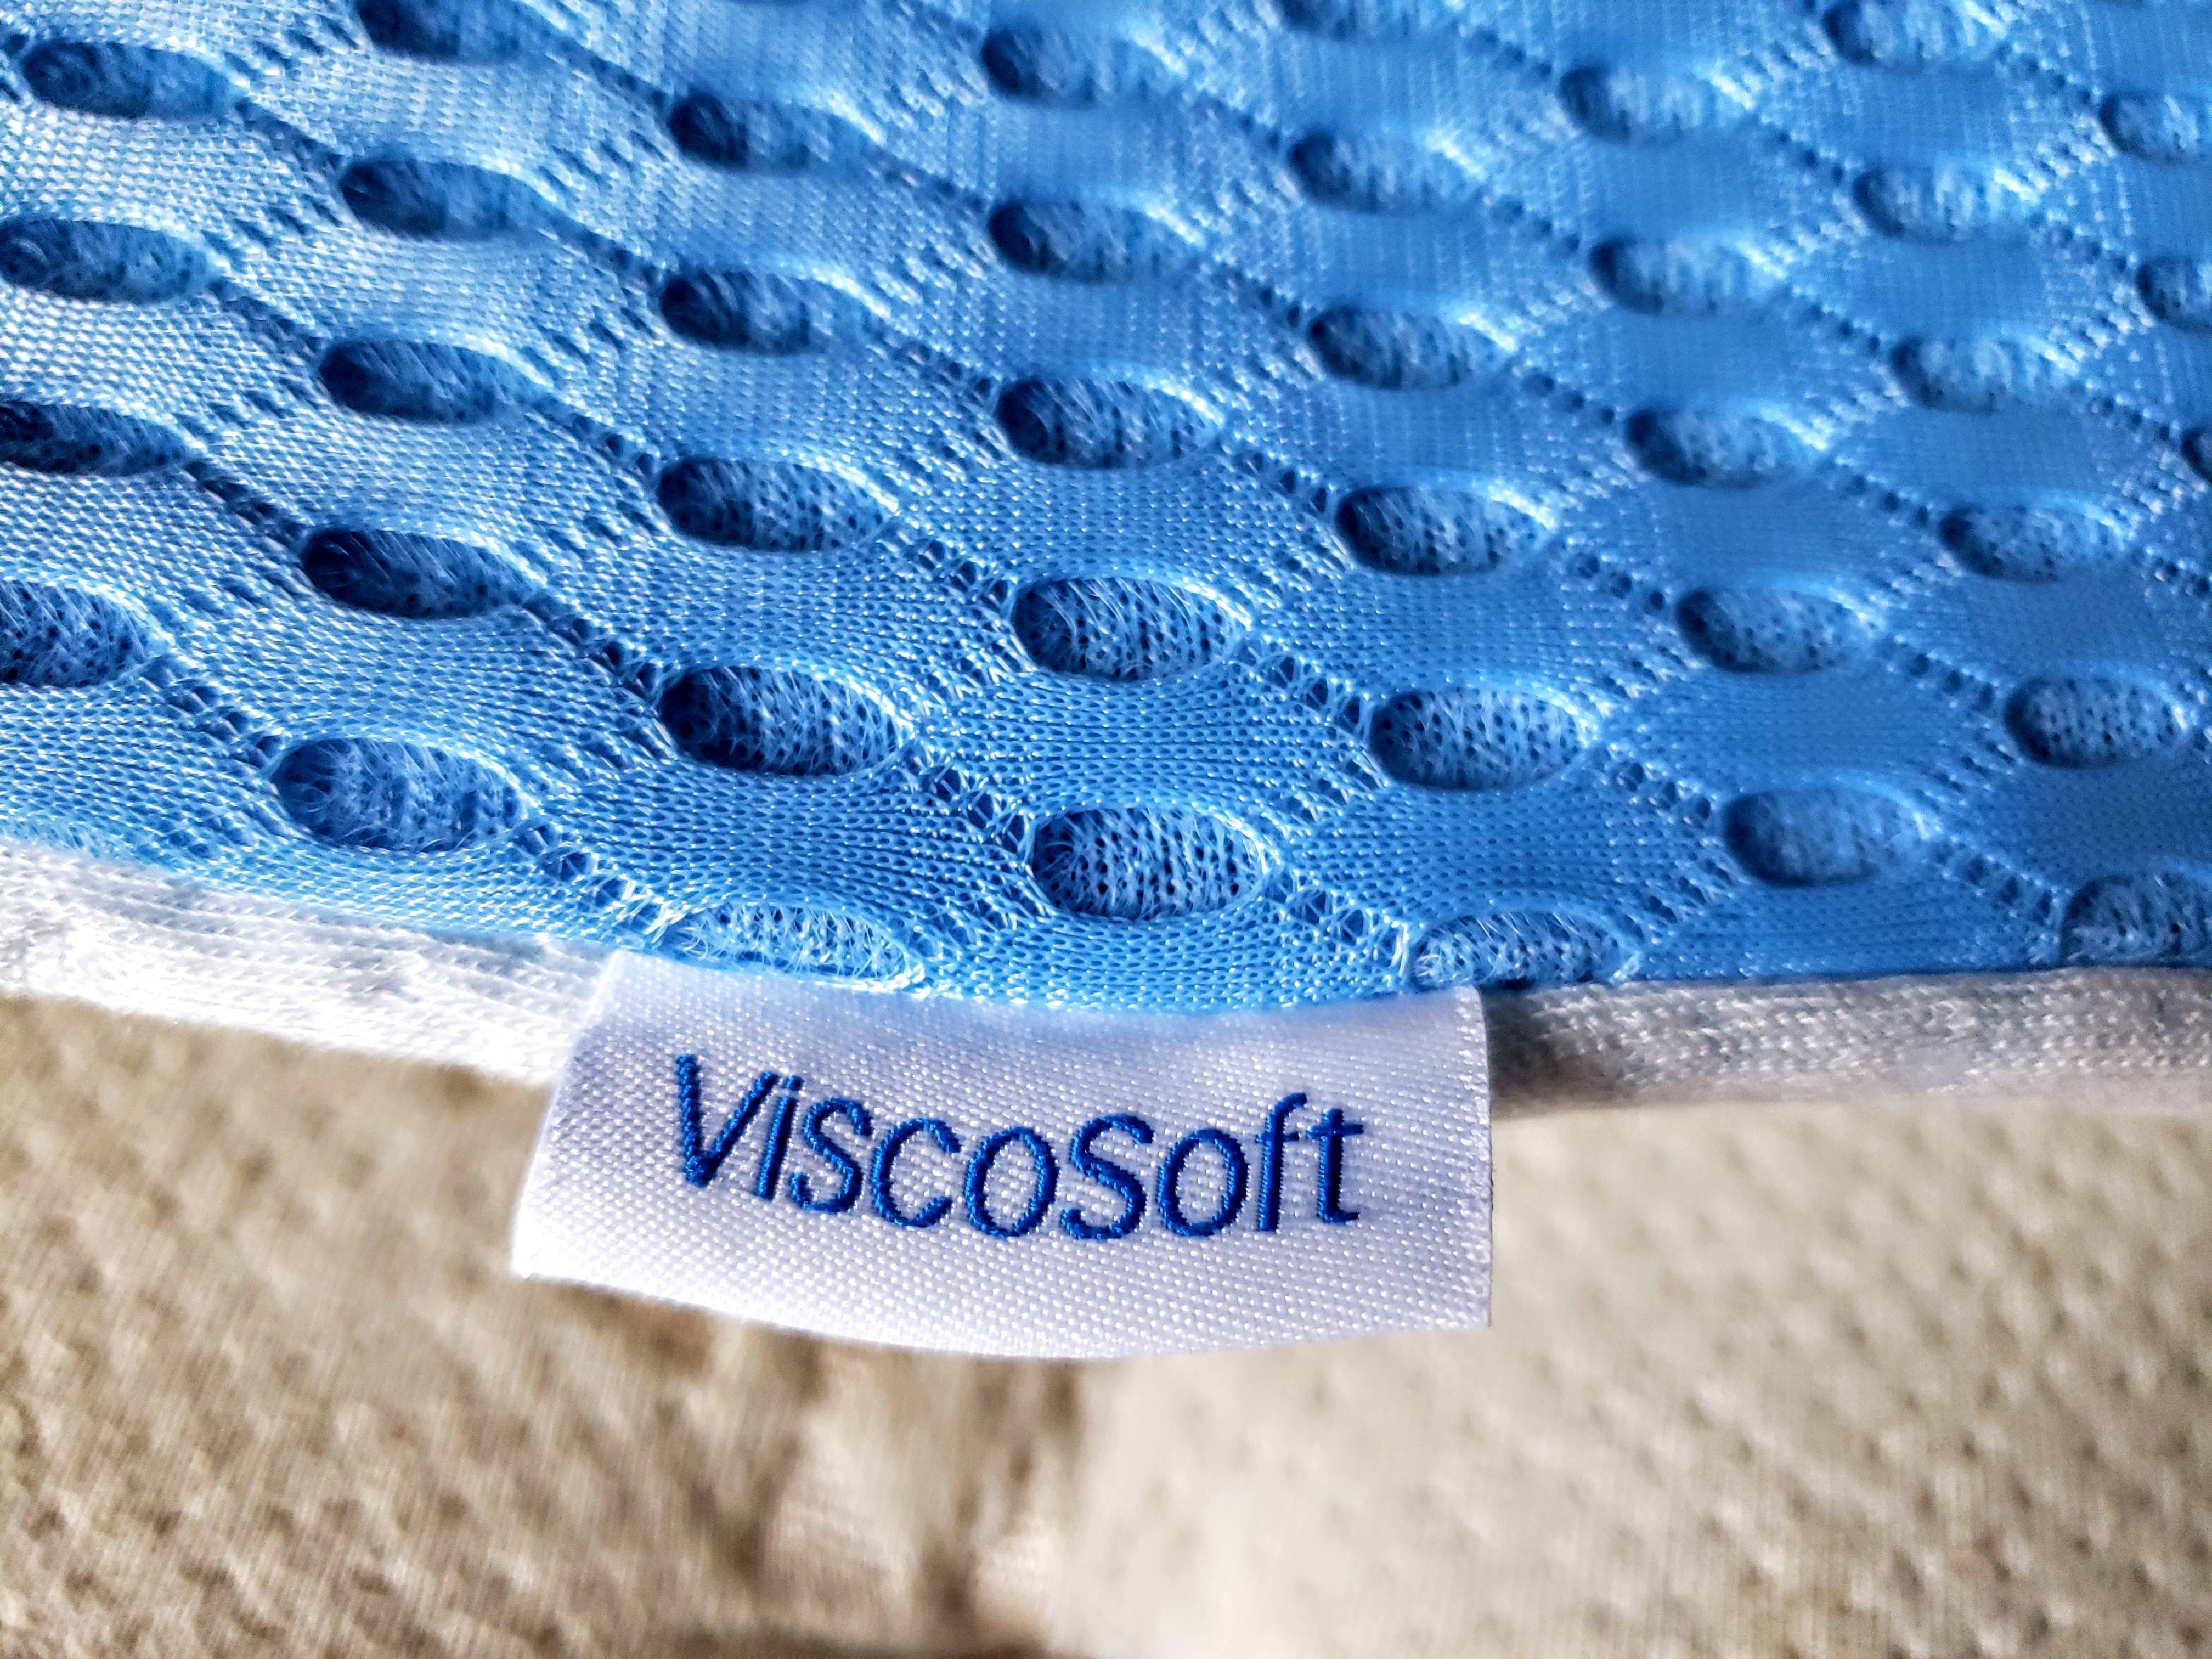 viscosoft hybrid mattress topper